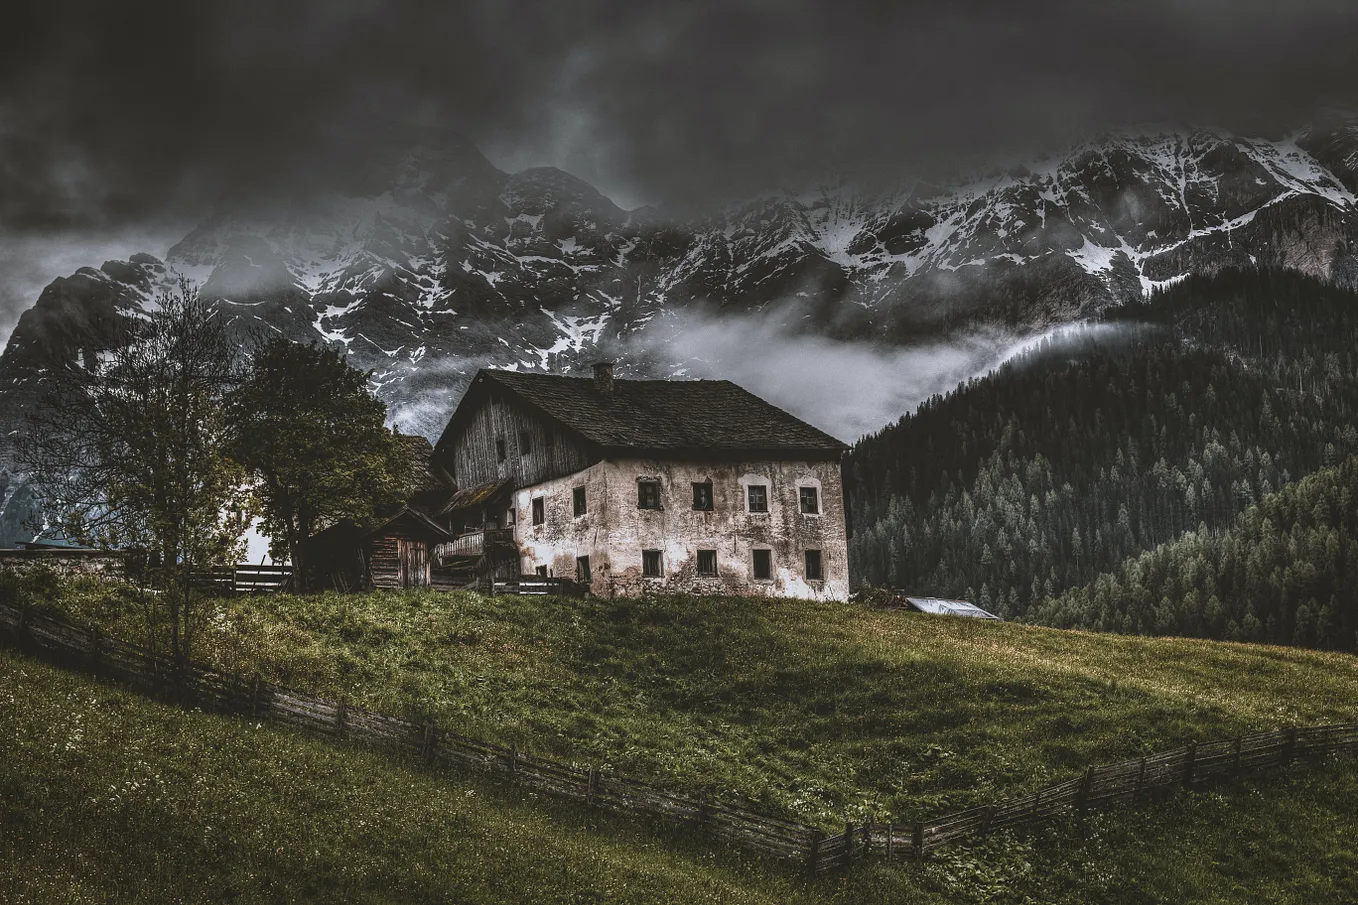 House. Photo by eberhard grossgasteiger on Pexels.